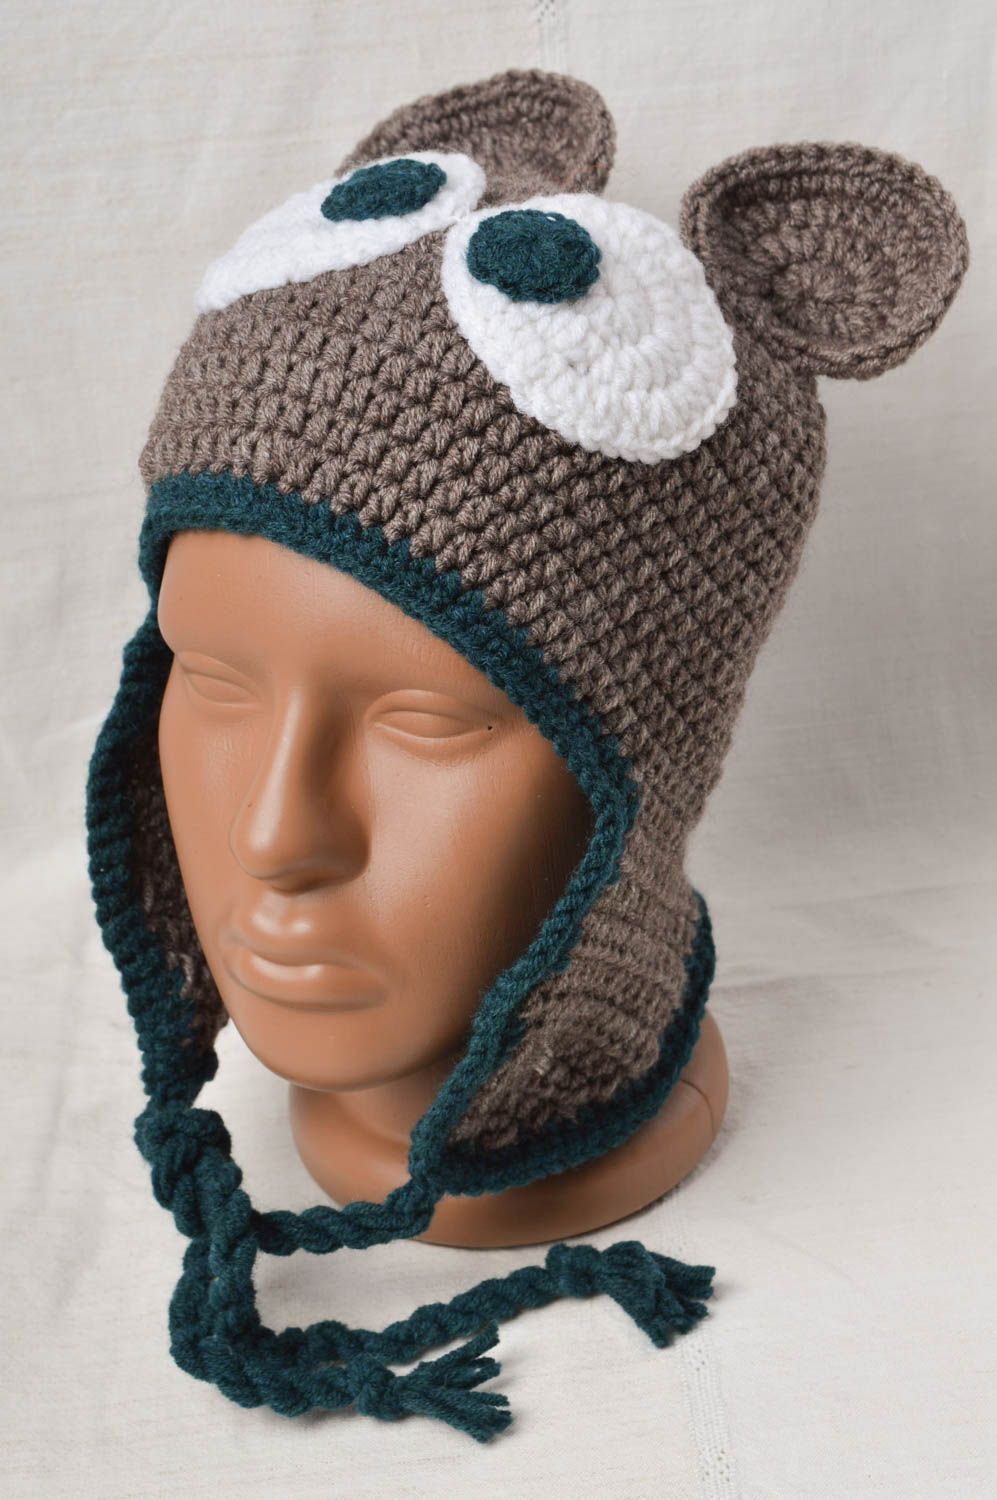 Stylish handmade crochet hat designs warm hat for kids winter hat ideas photo 2